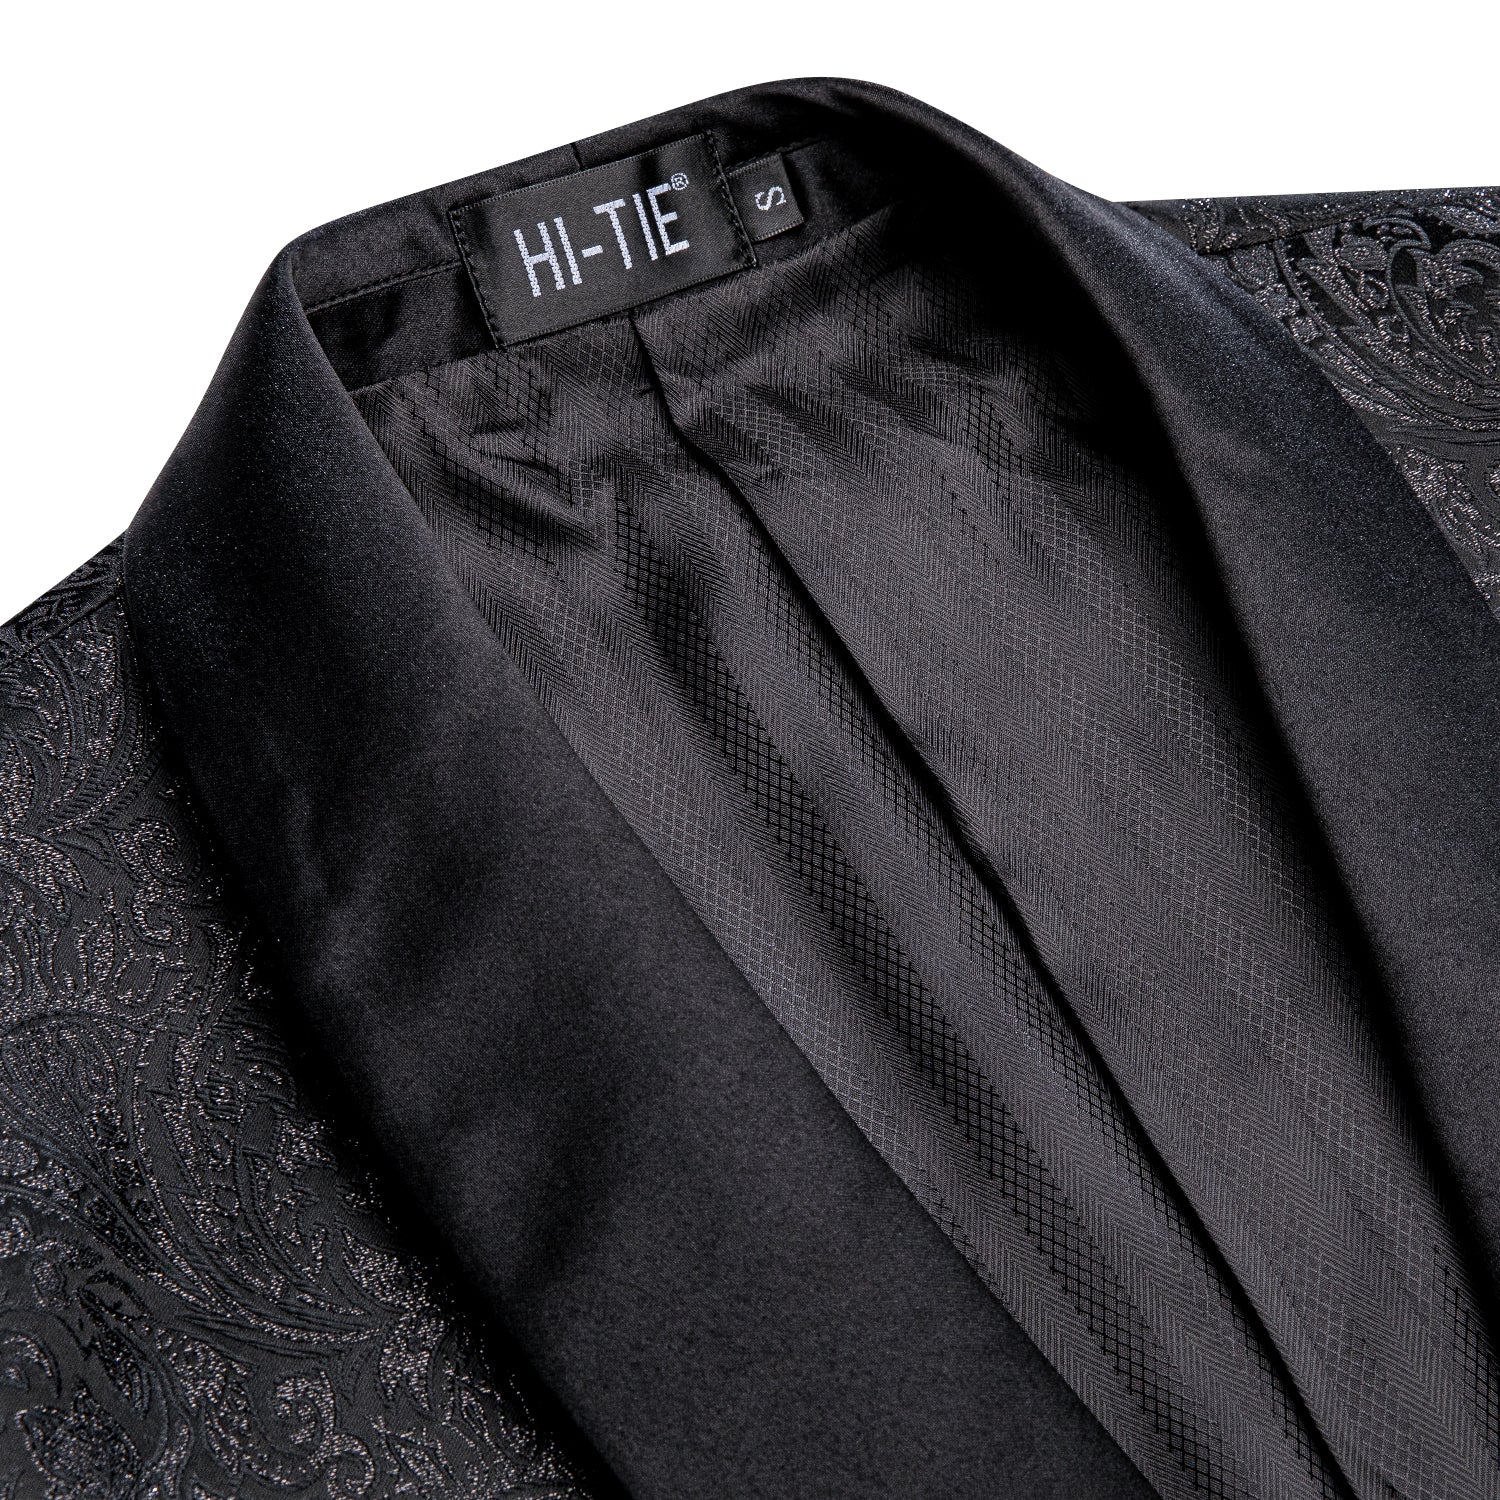 Luxury Black Shinning Floral Men's Suit Set